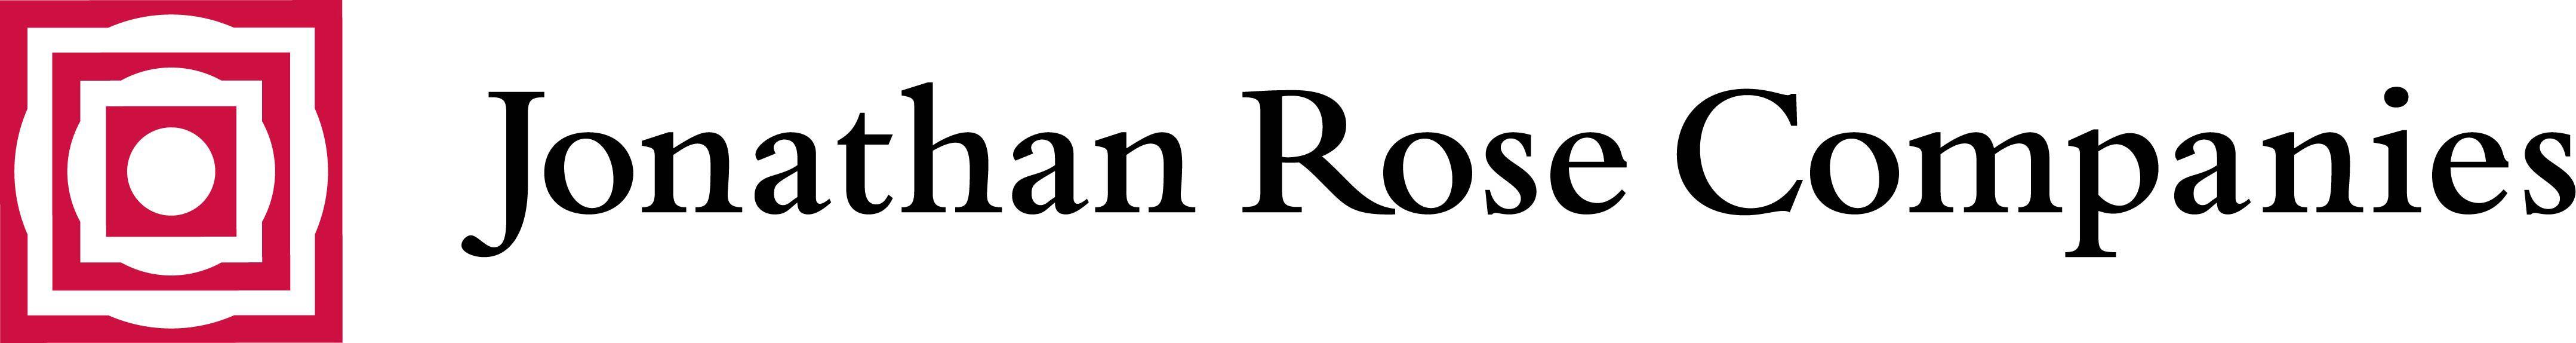 Rose Company Logo - Calvert Impact Capital Portfolio Impact Capital